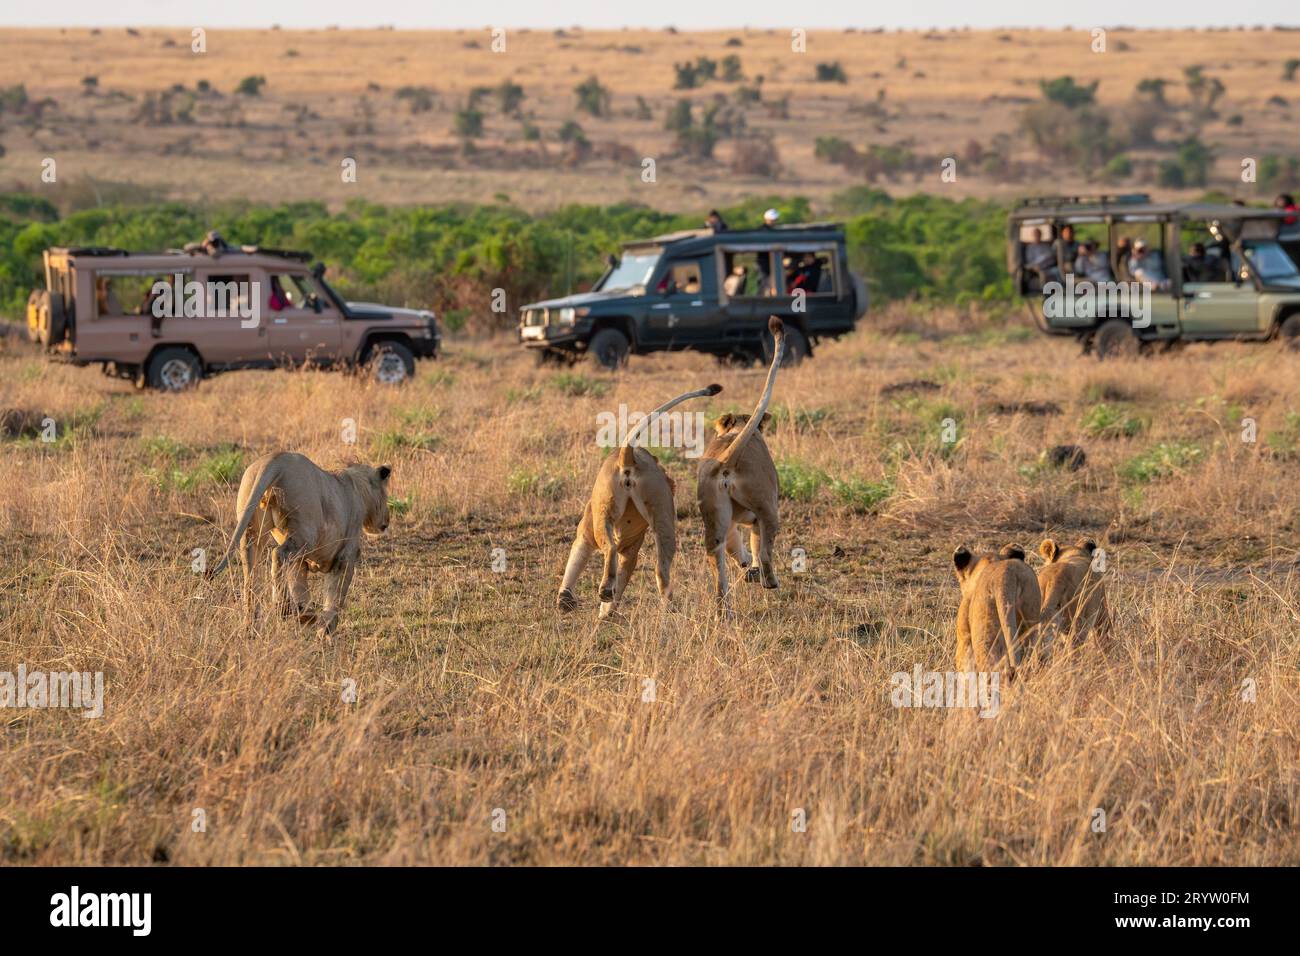 Lions in Masai Mara National Reserve Kenya Africa, Safari, Game drive Stock Photo